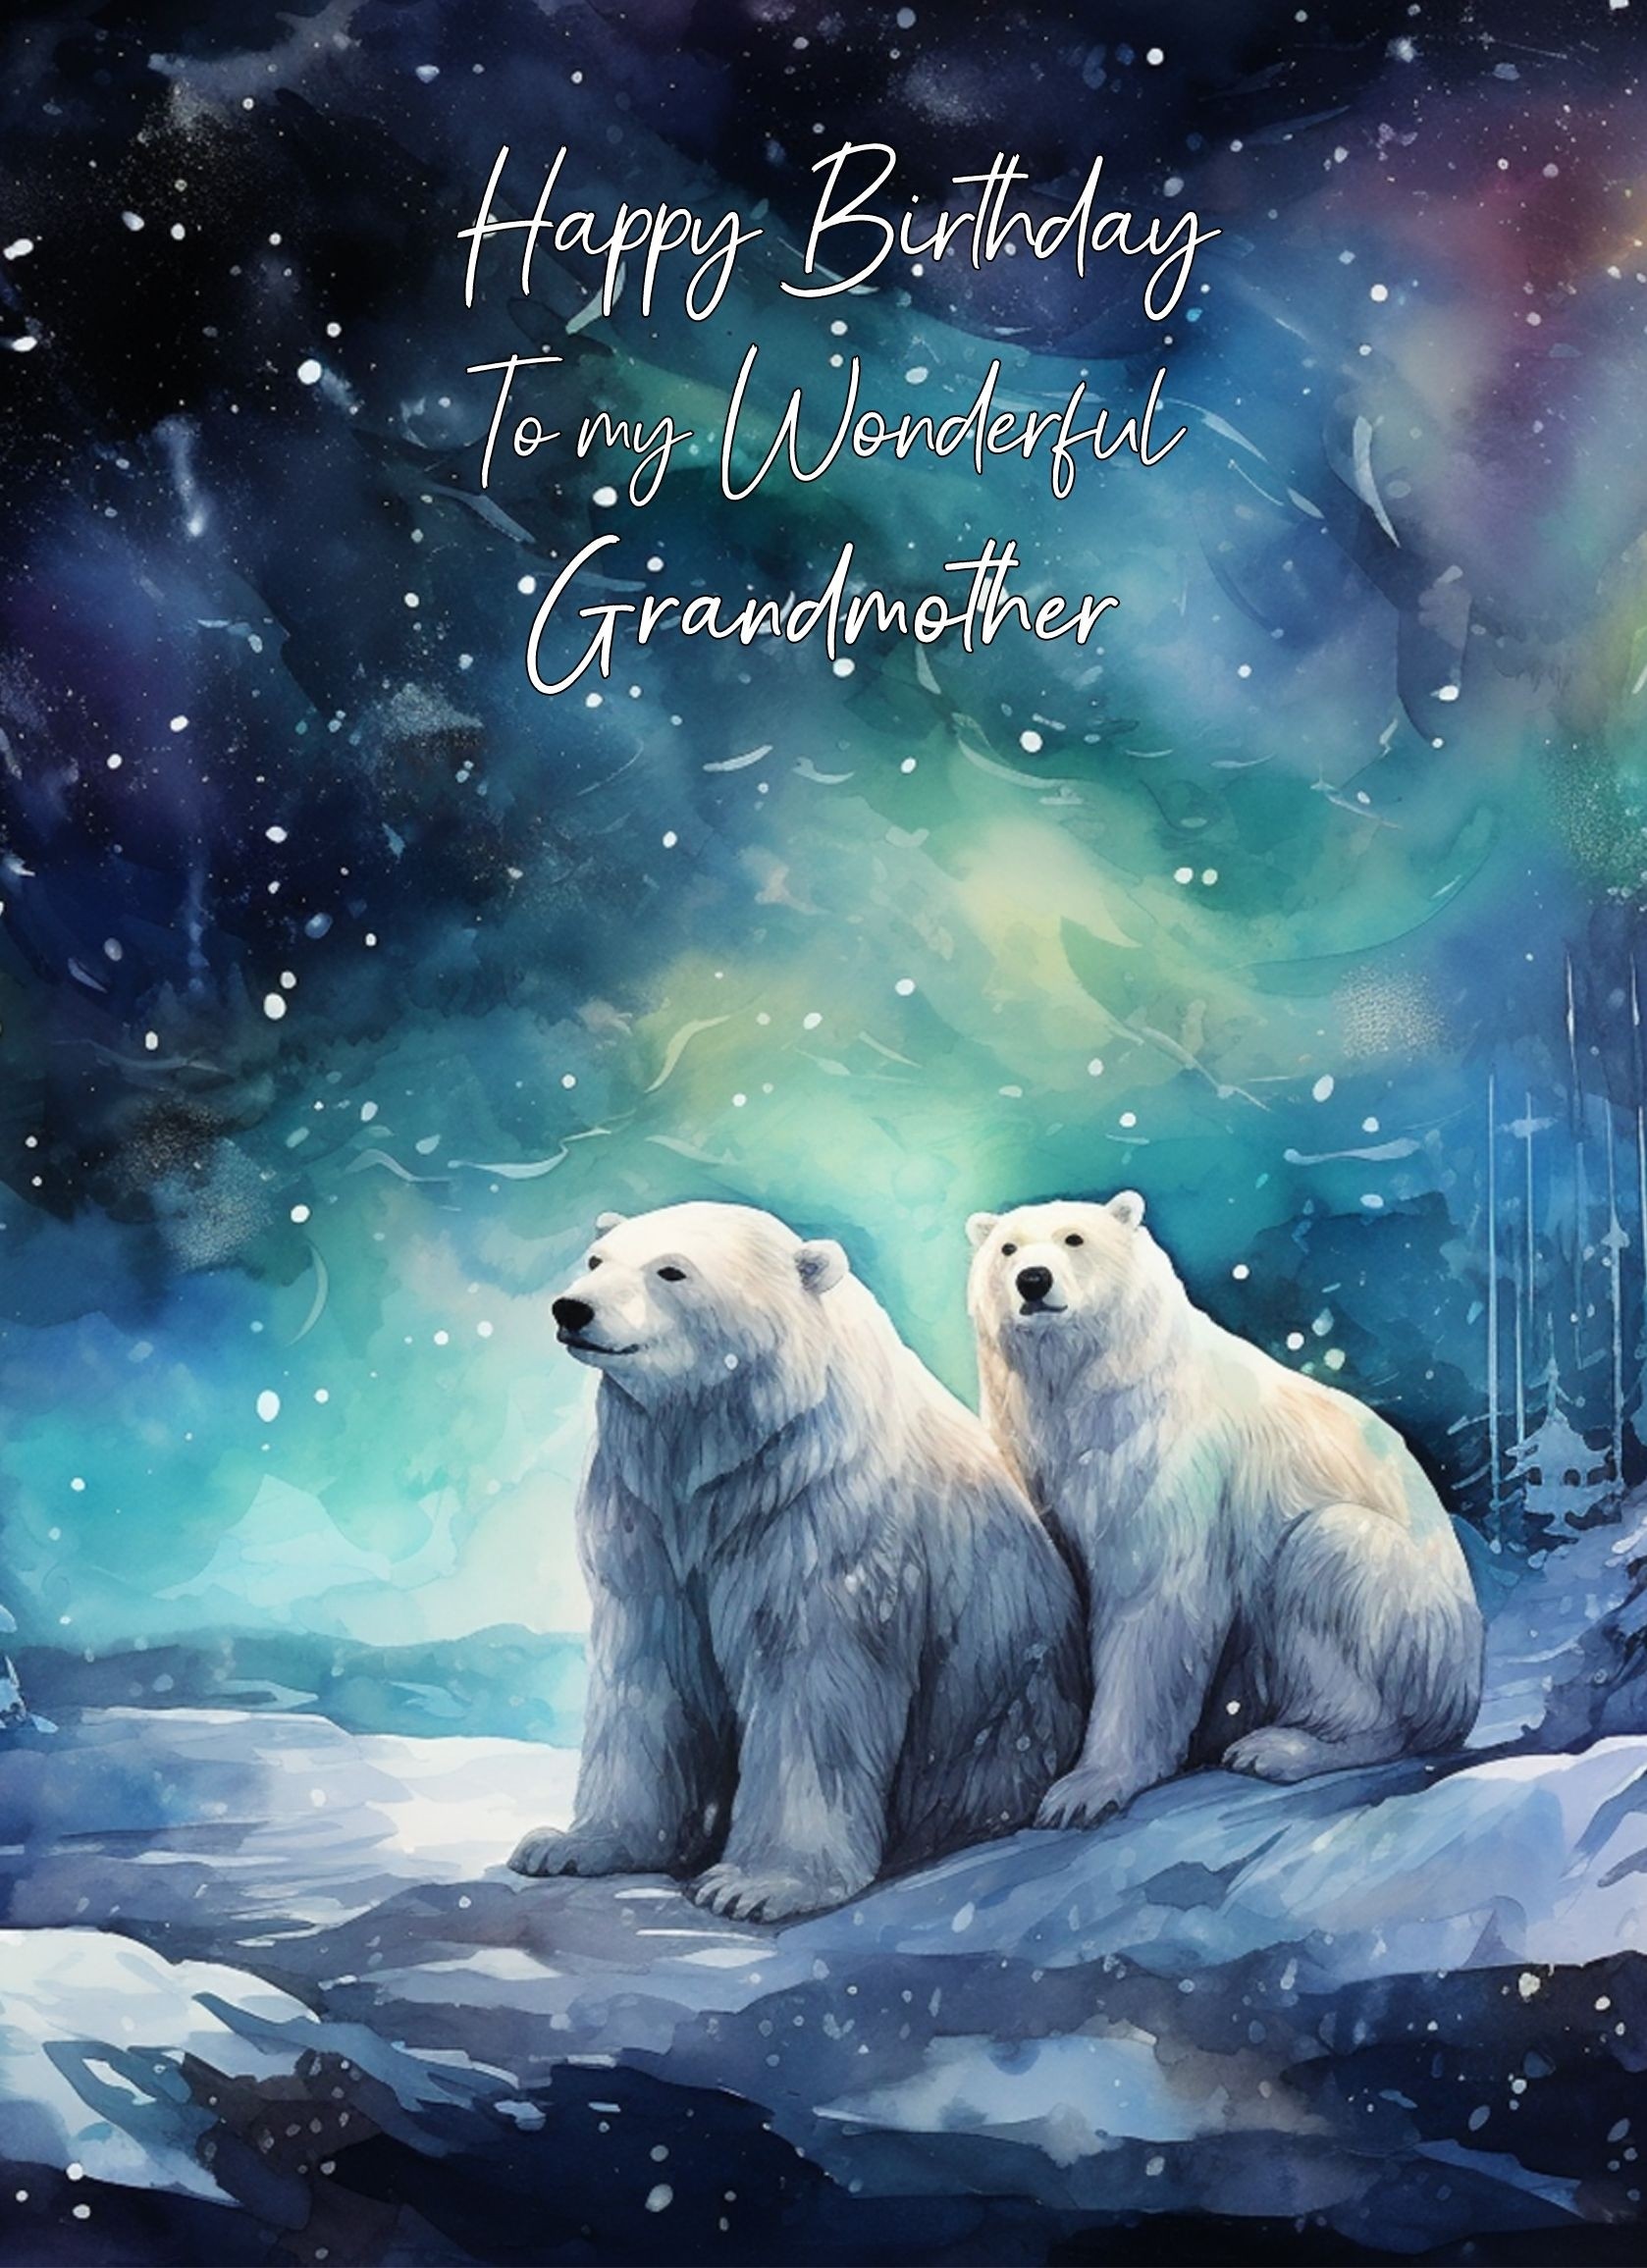 Polar Bear Art Birthday Card For Grandmother (Design 5)